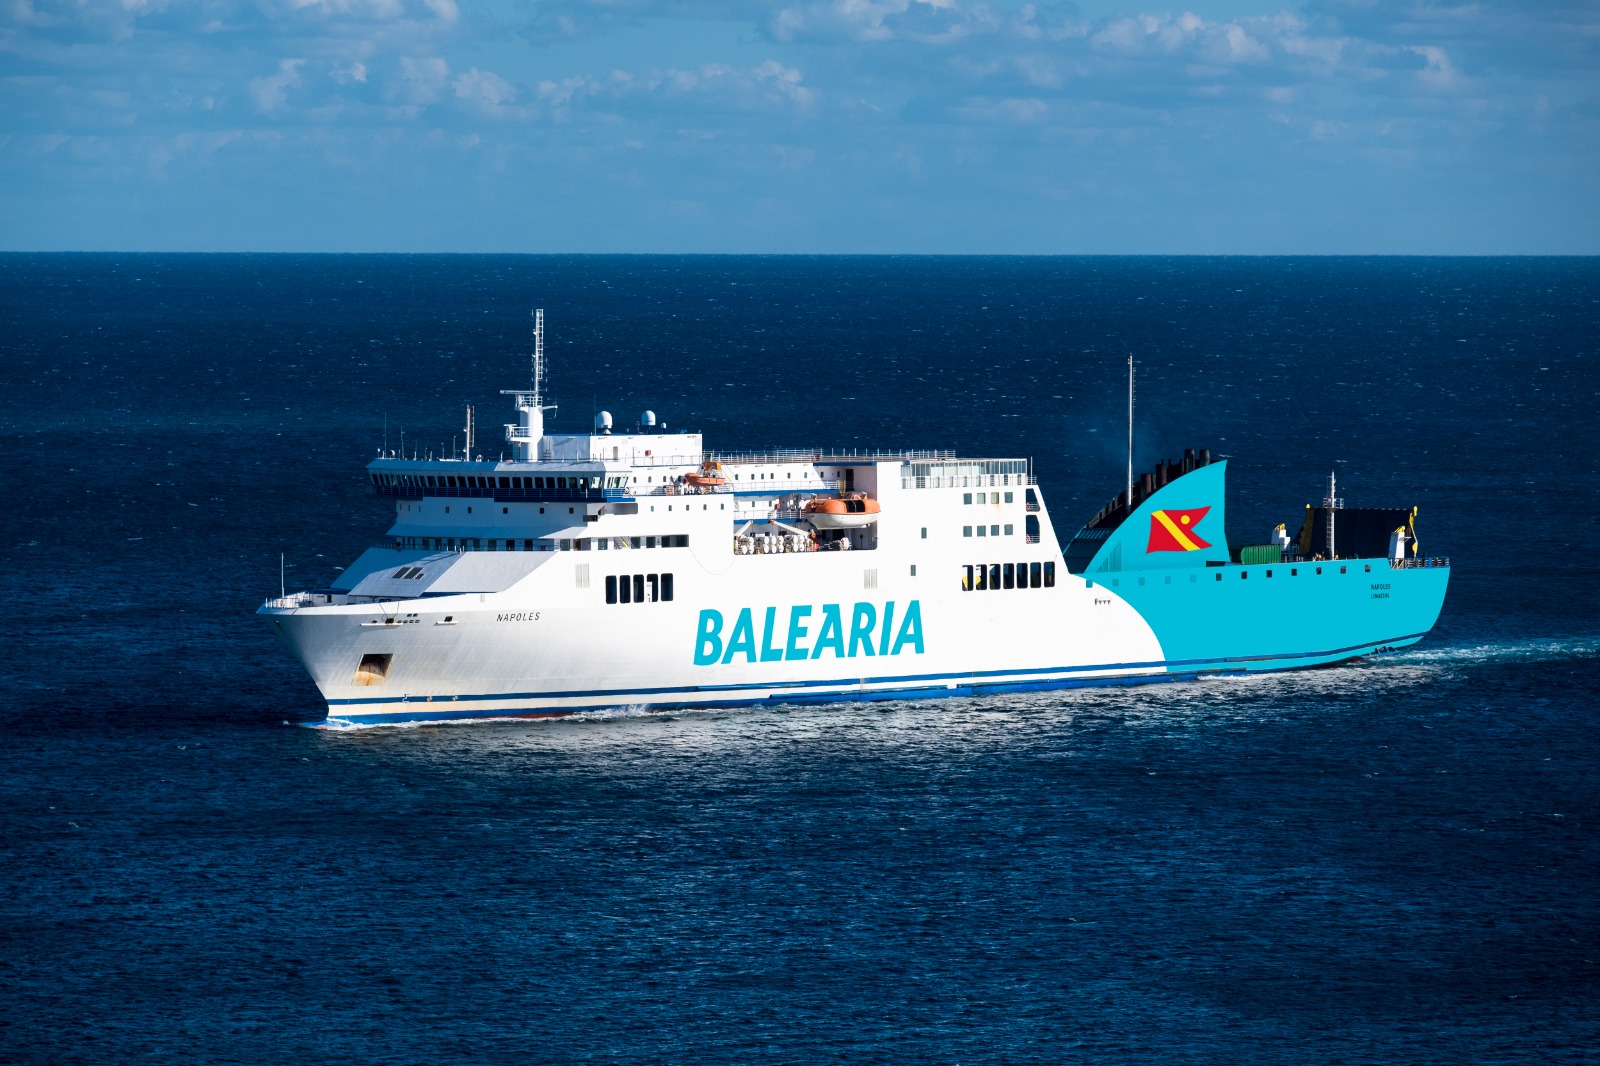 Baleària's LNG retrofit ferry Napoles starts operation